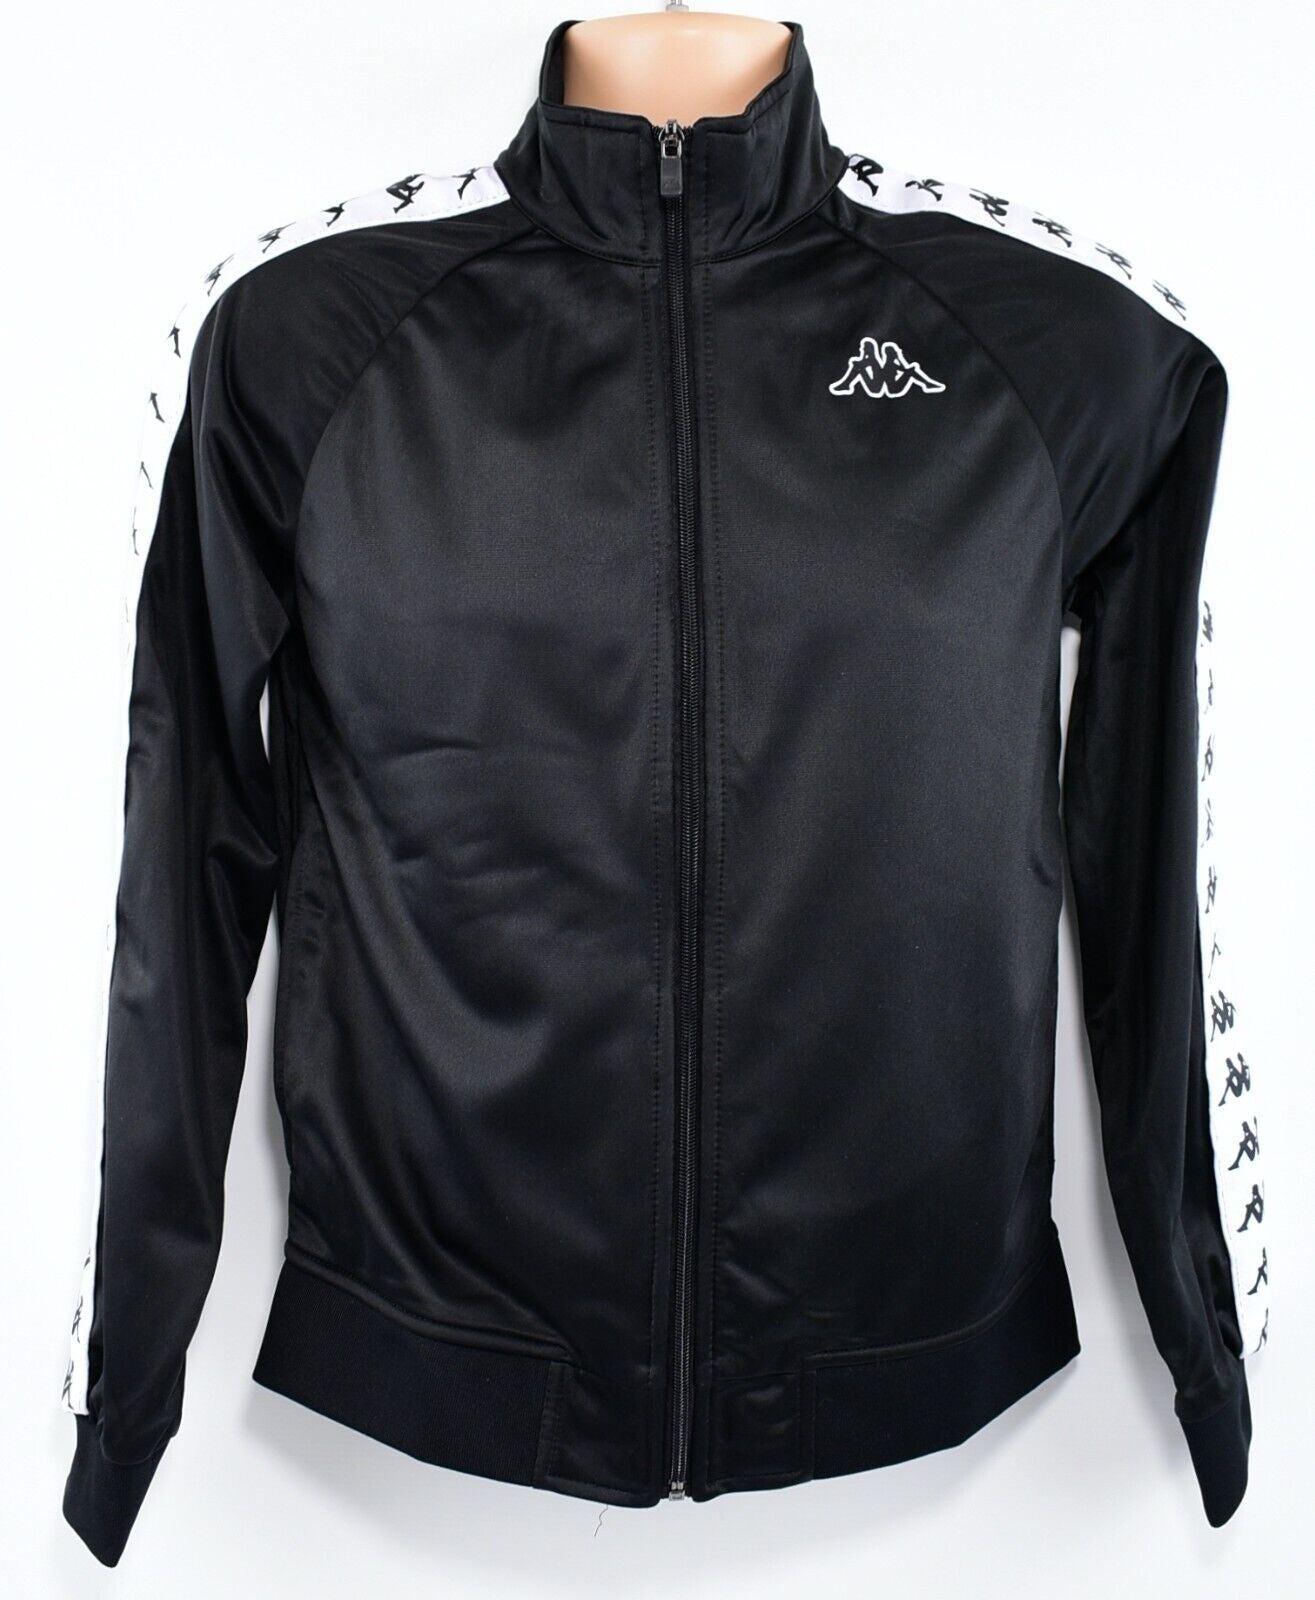 KAPPA Men's Full Zip Track Jacket, Track Suit Top,  SLIM FIT, Black, size MEDIUM